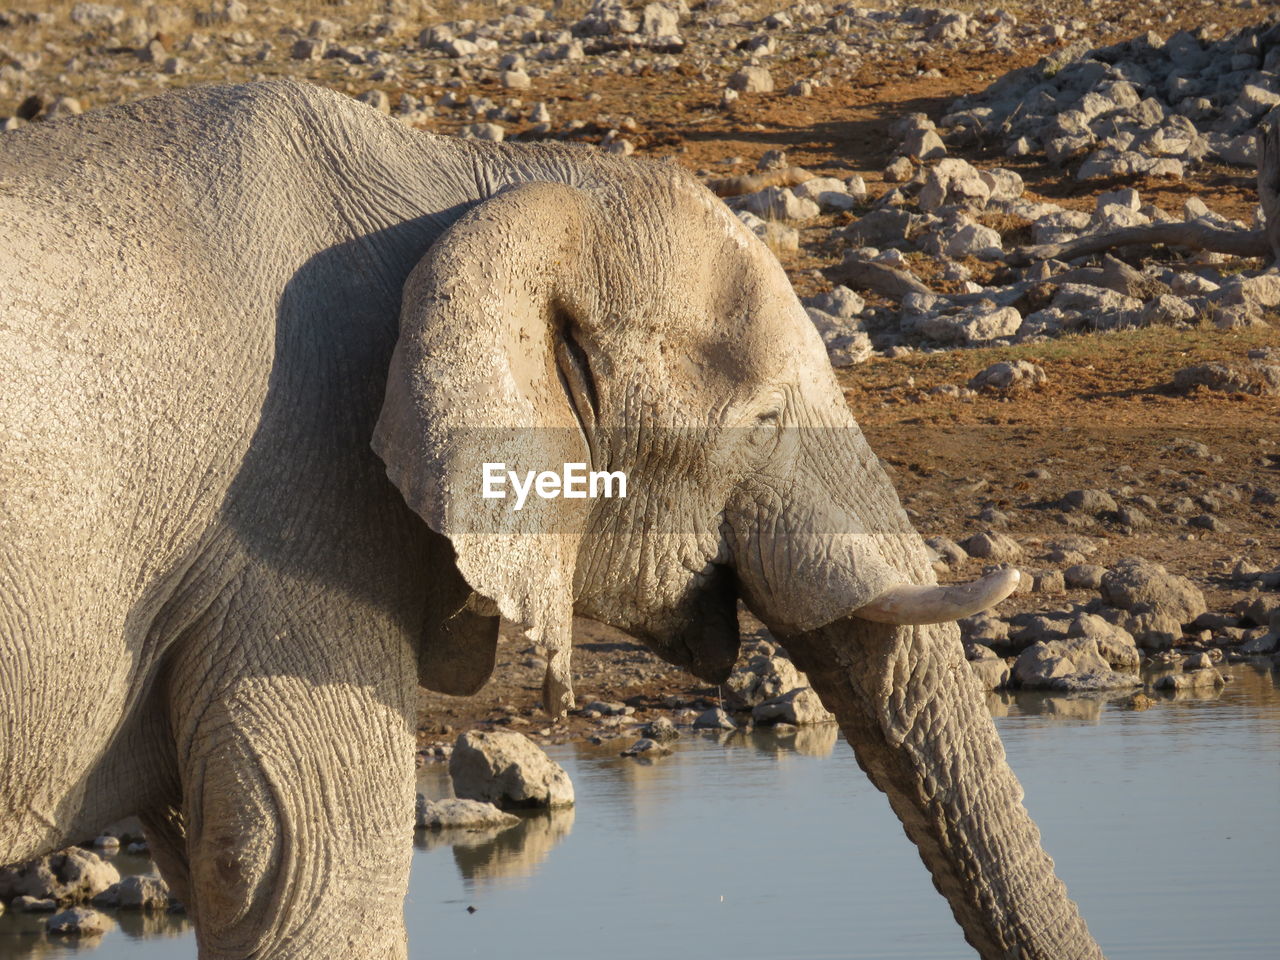 ELEPHANT DRINKING WATER